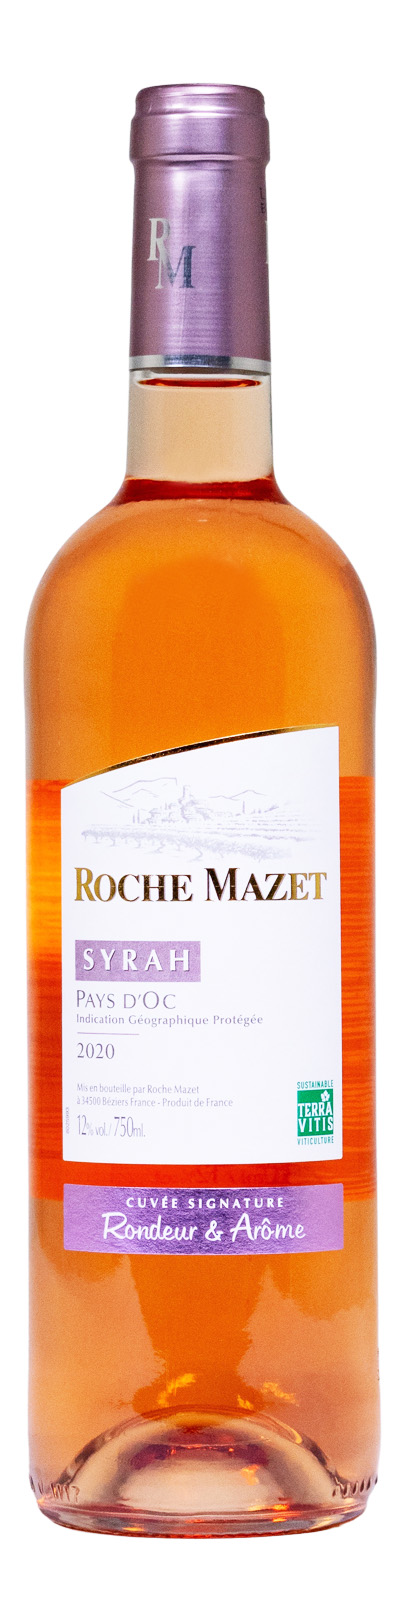 Roche Mazet Syrah Rose Vins Pays dOc - 0,75L 12% vol